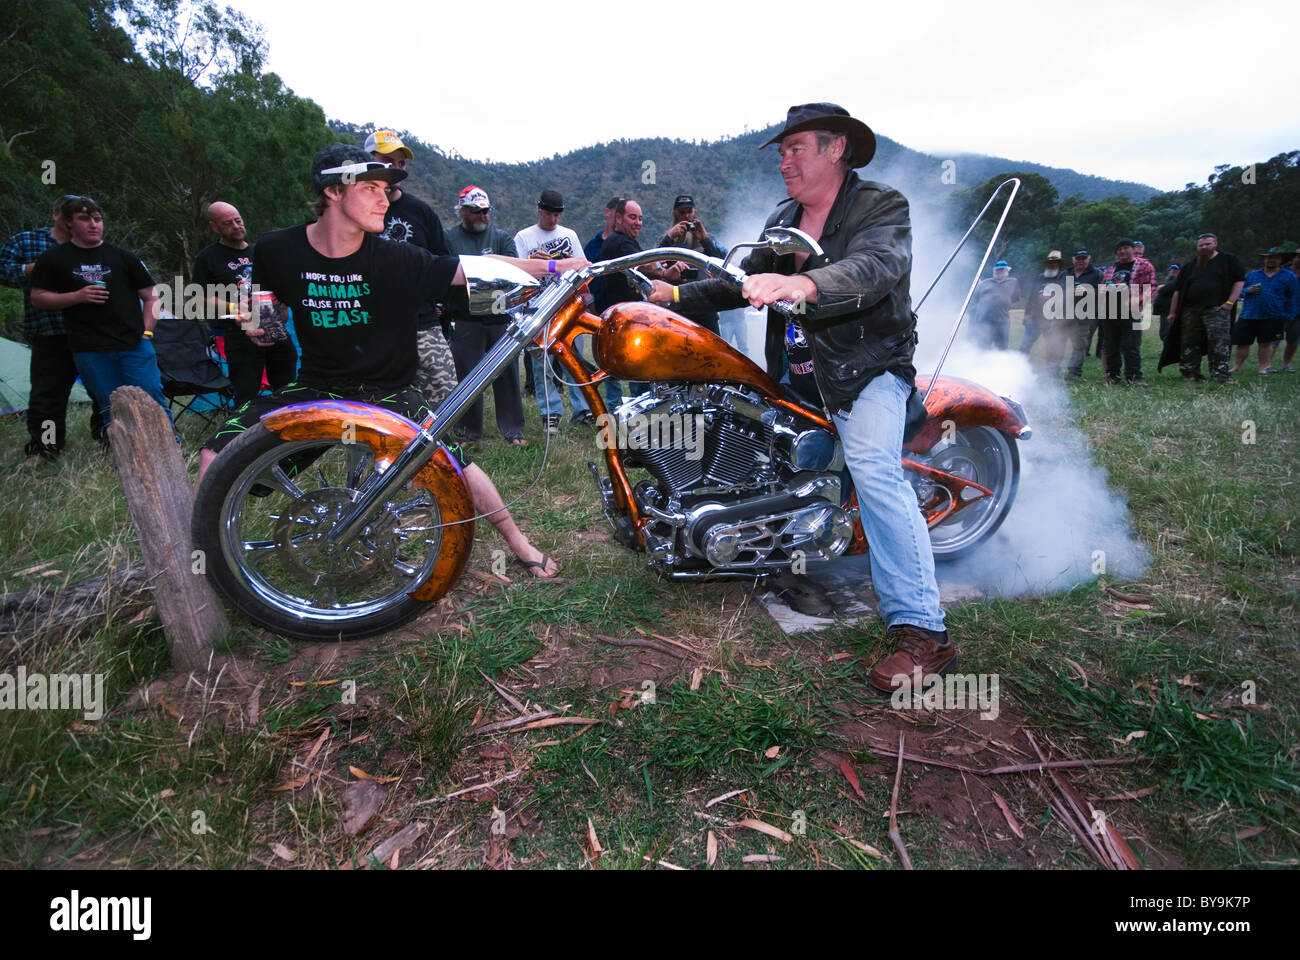 motorcycle burnout Stock Photo